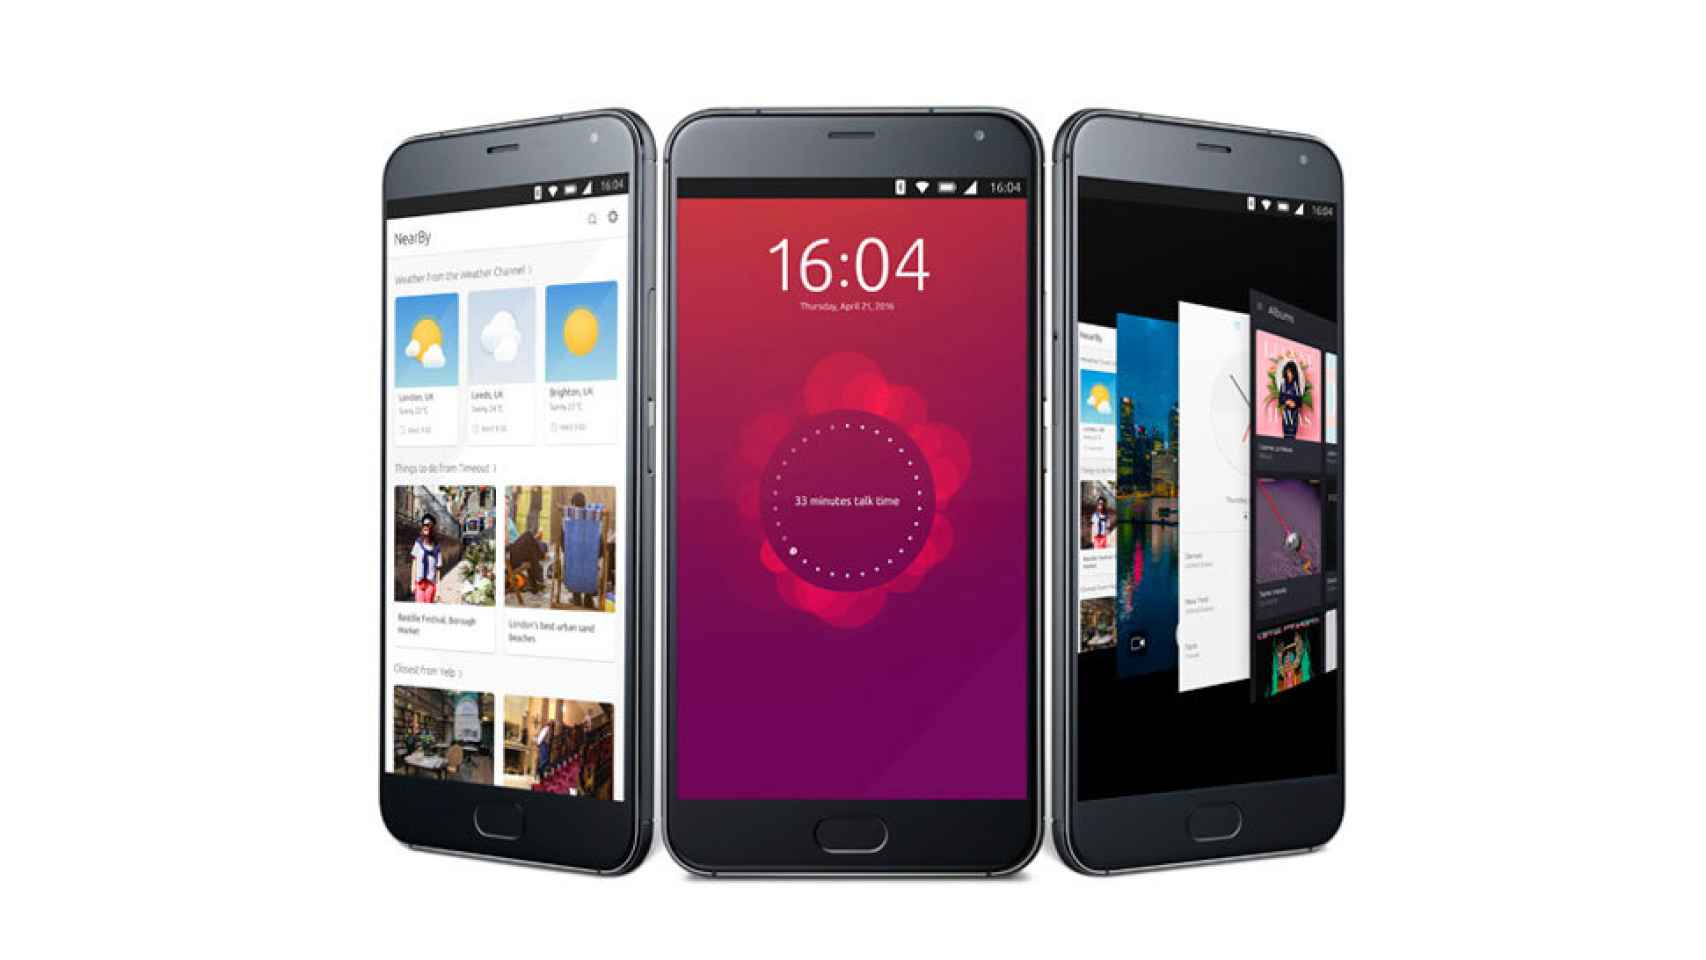 Meizu Pro 5 Ubuntu: el mejor teléfono con Ubuntu hasta la fecha